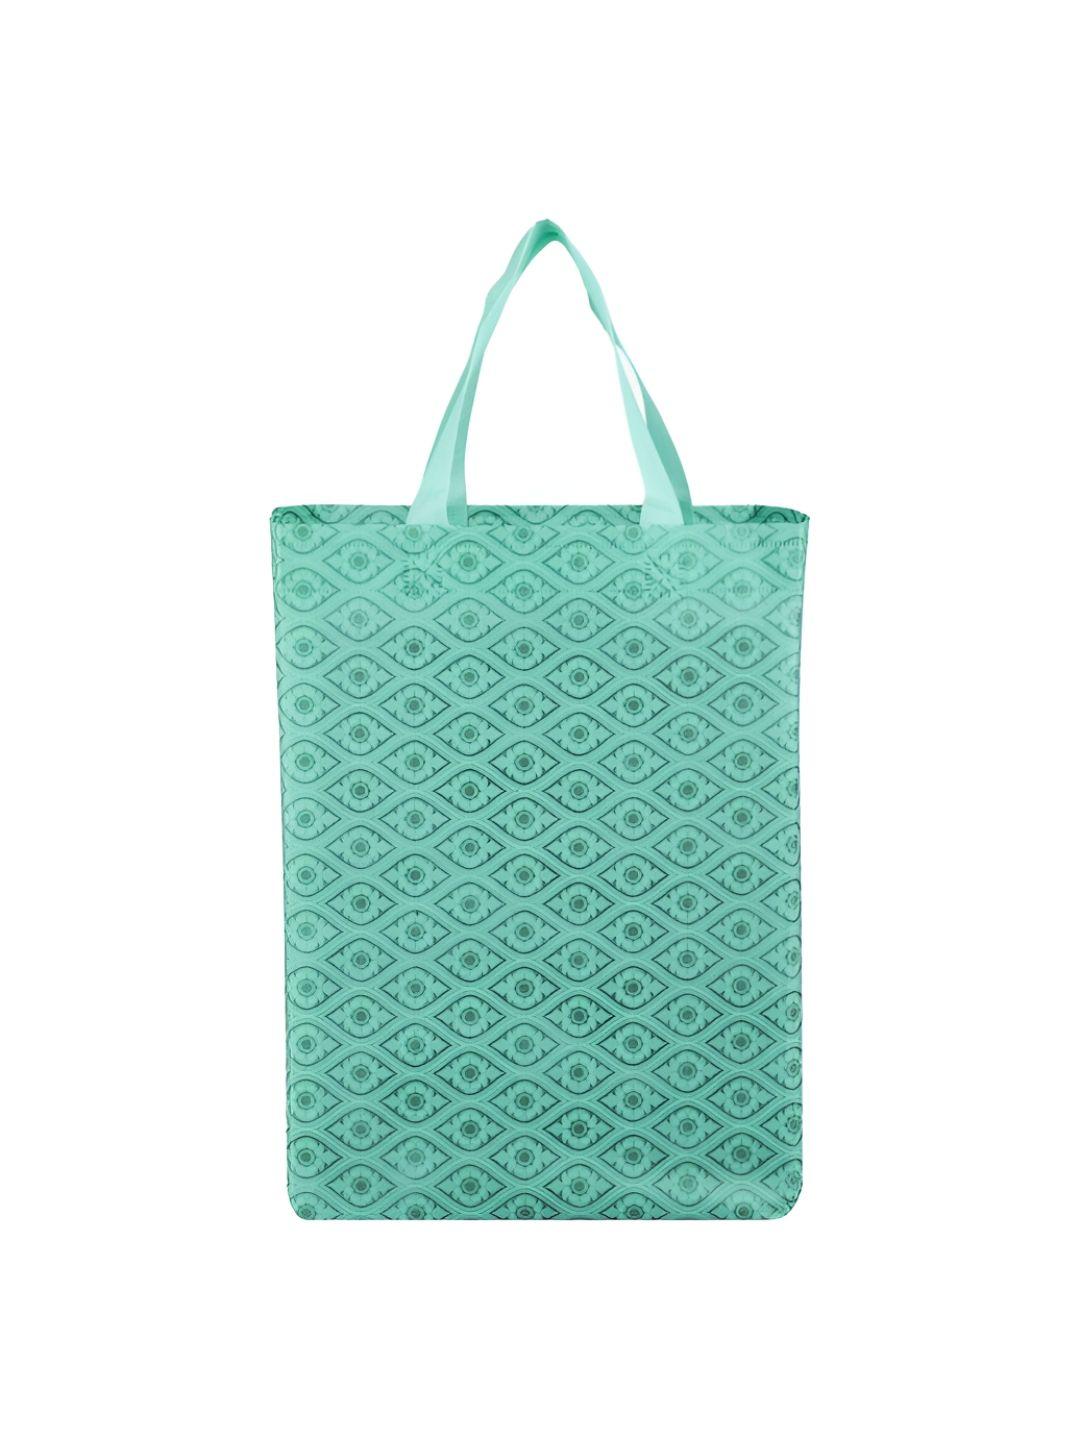 kuber industries 24-pcs ethnic motifs printed shopper tote bag